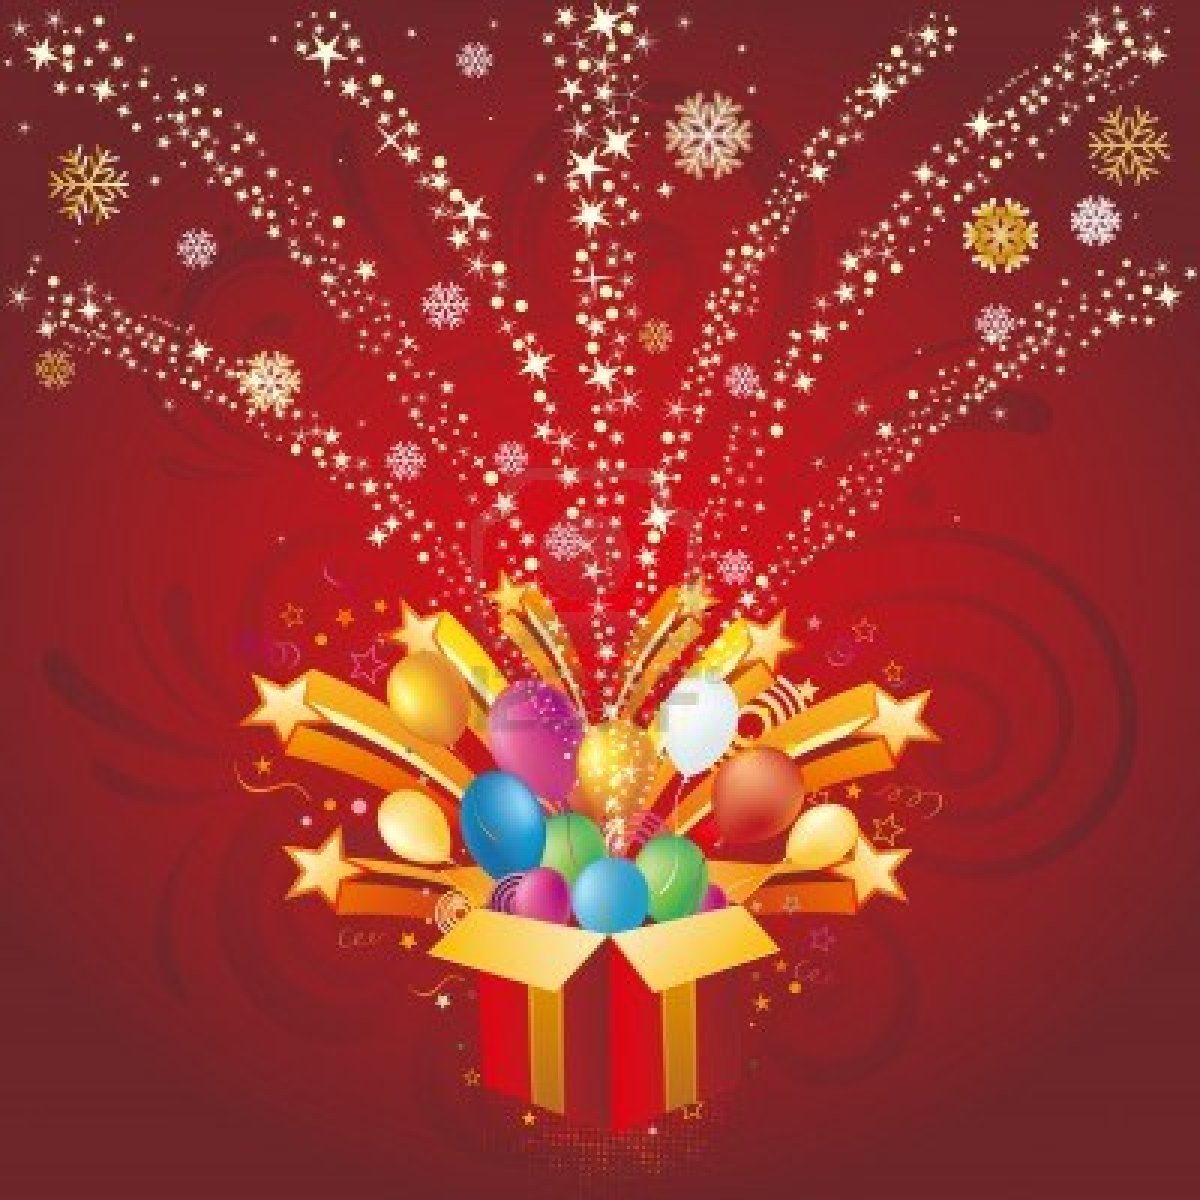 8174096-gift-box-and-star-christmas-celebration-background ...